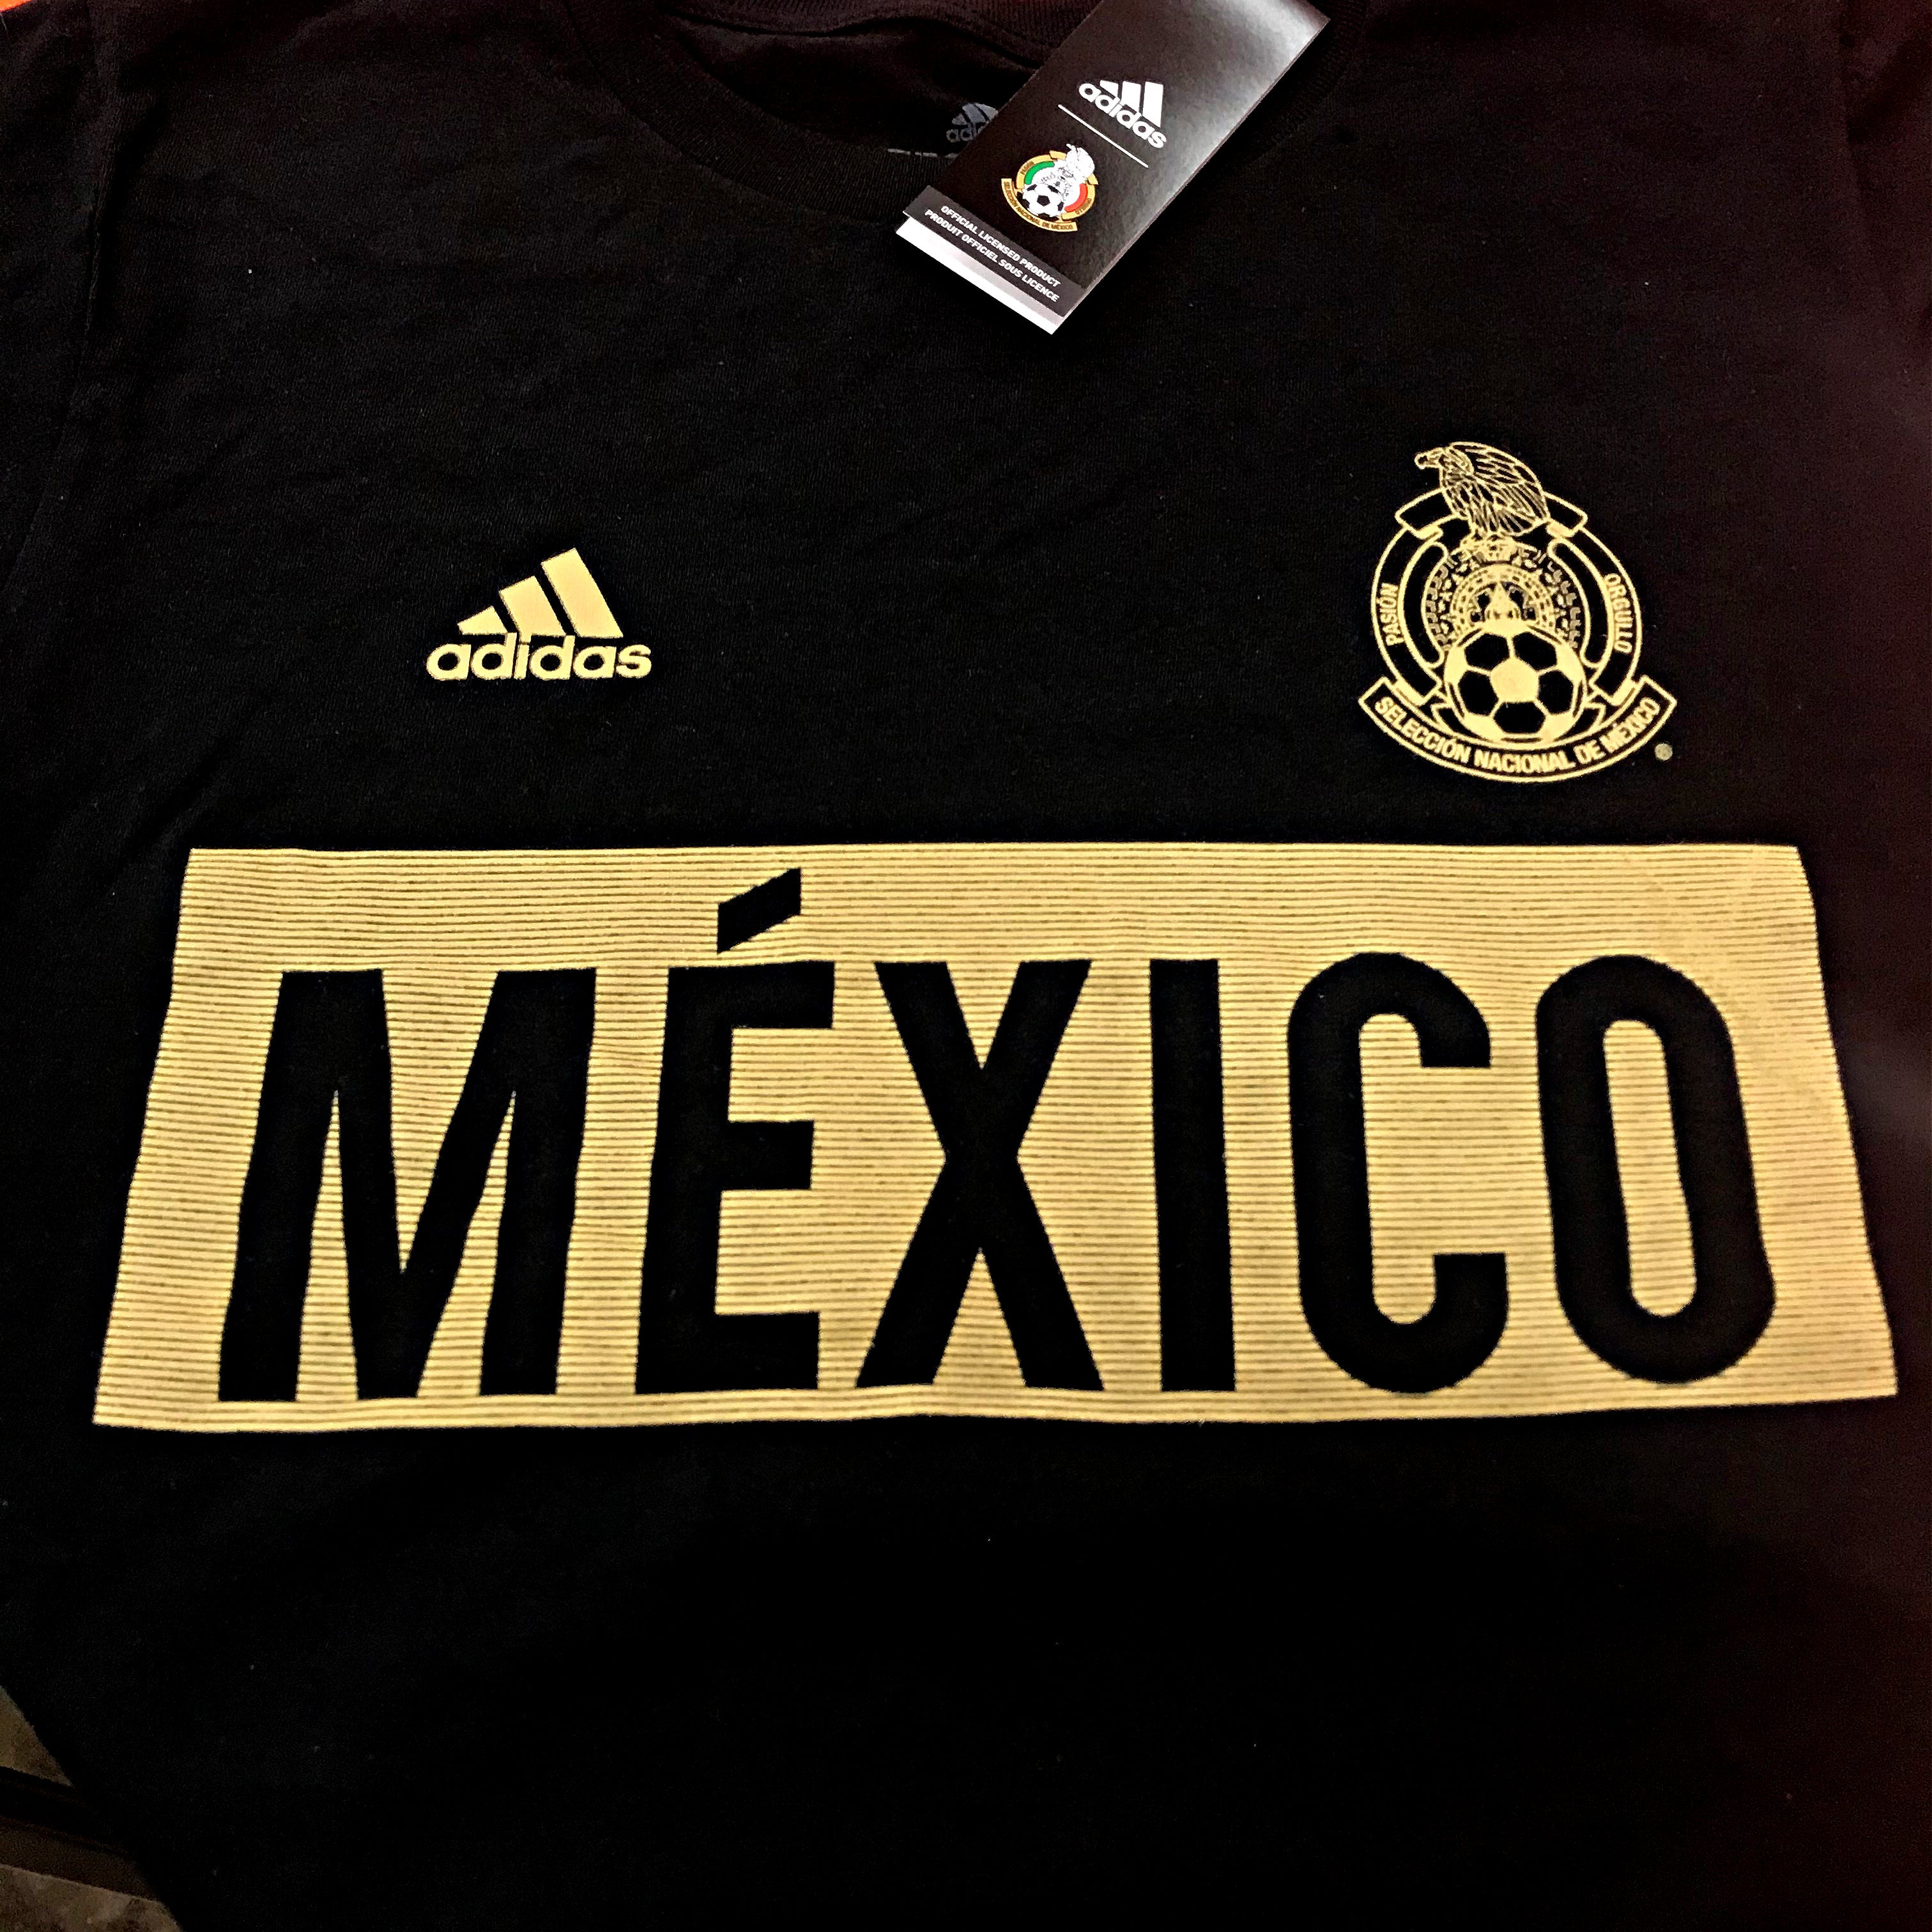 ADIDAS MEXICO STRIPES BAR T-SHIRT-BLACK/GOLD